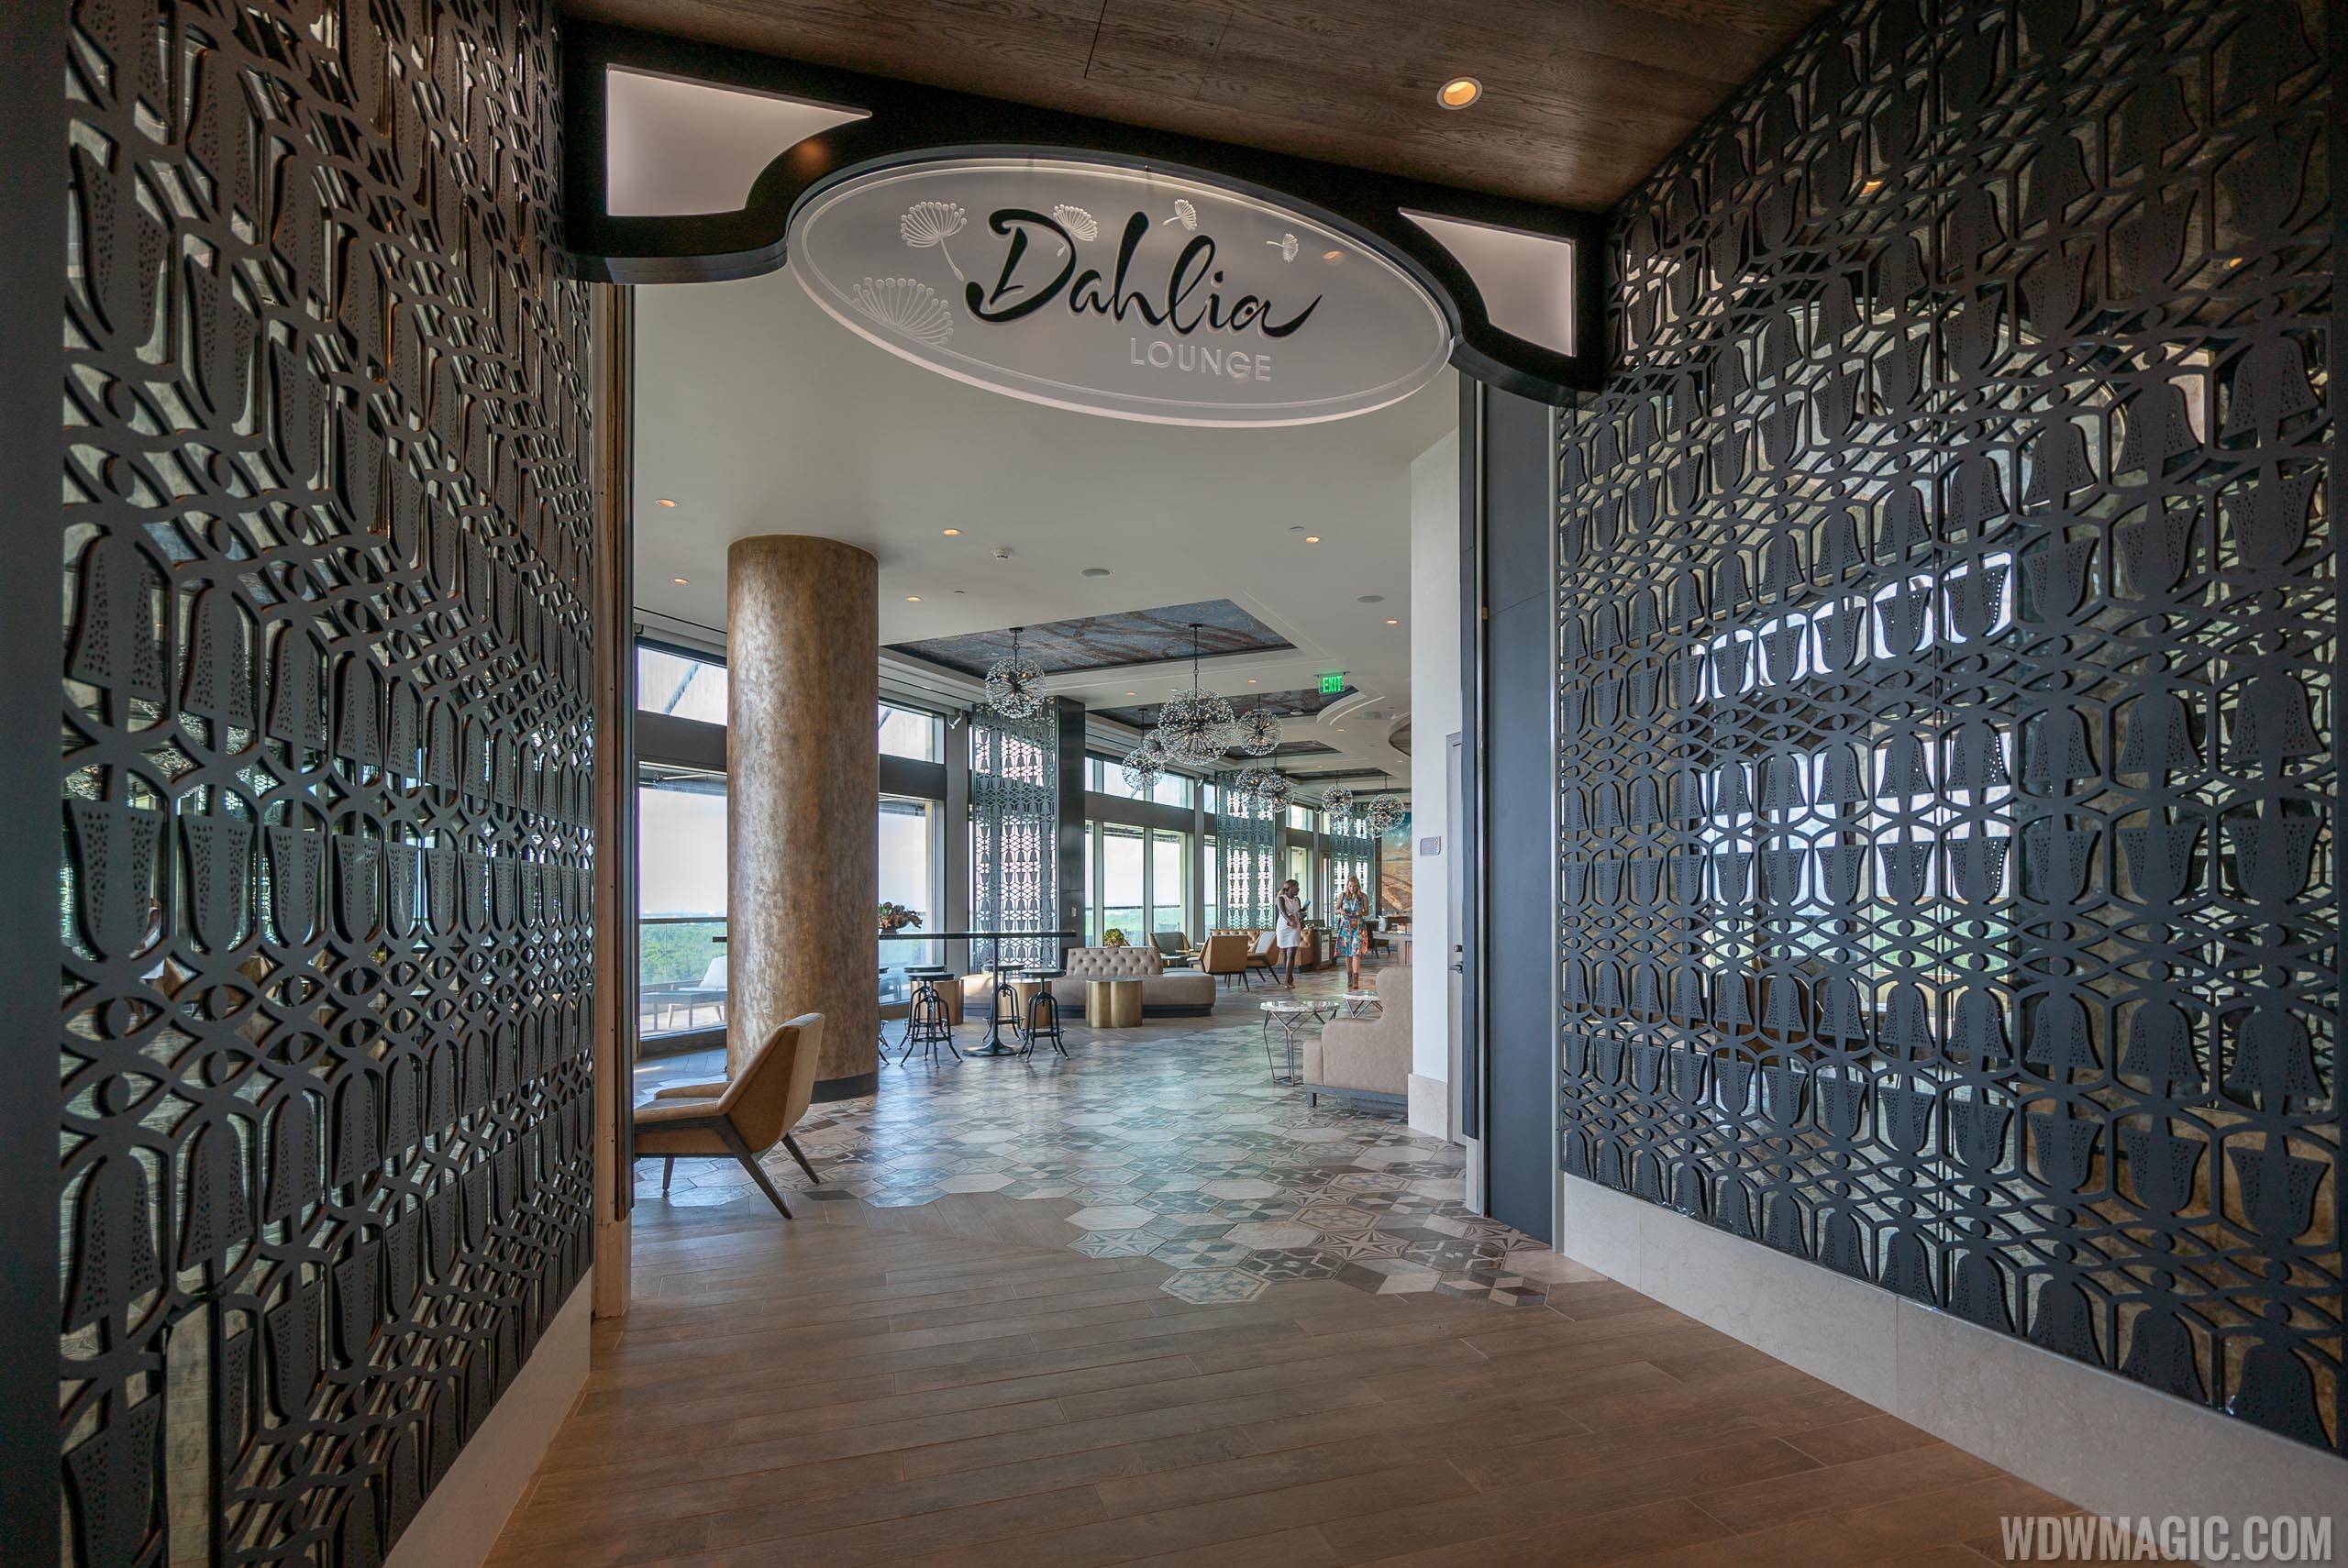 Dahlia Lounge entrance